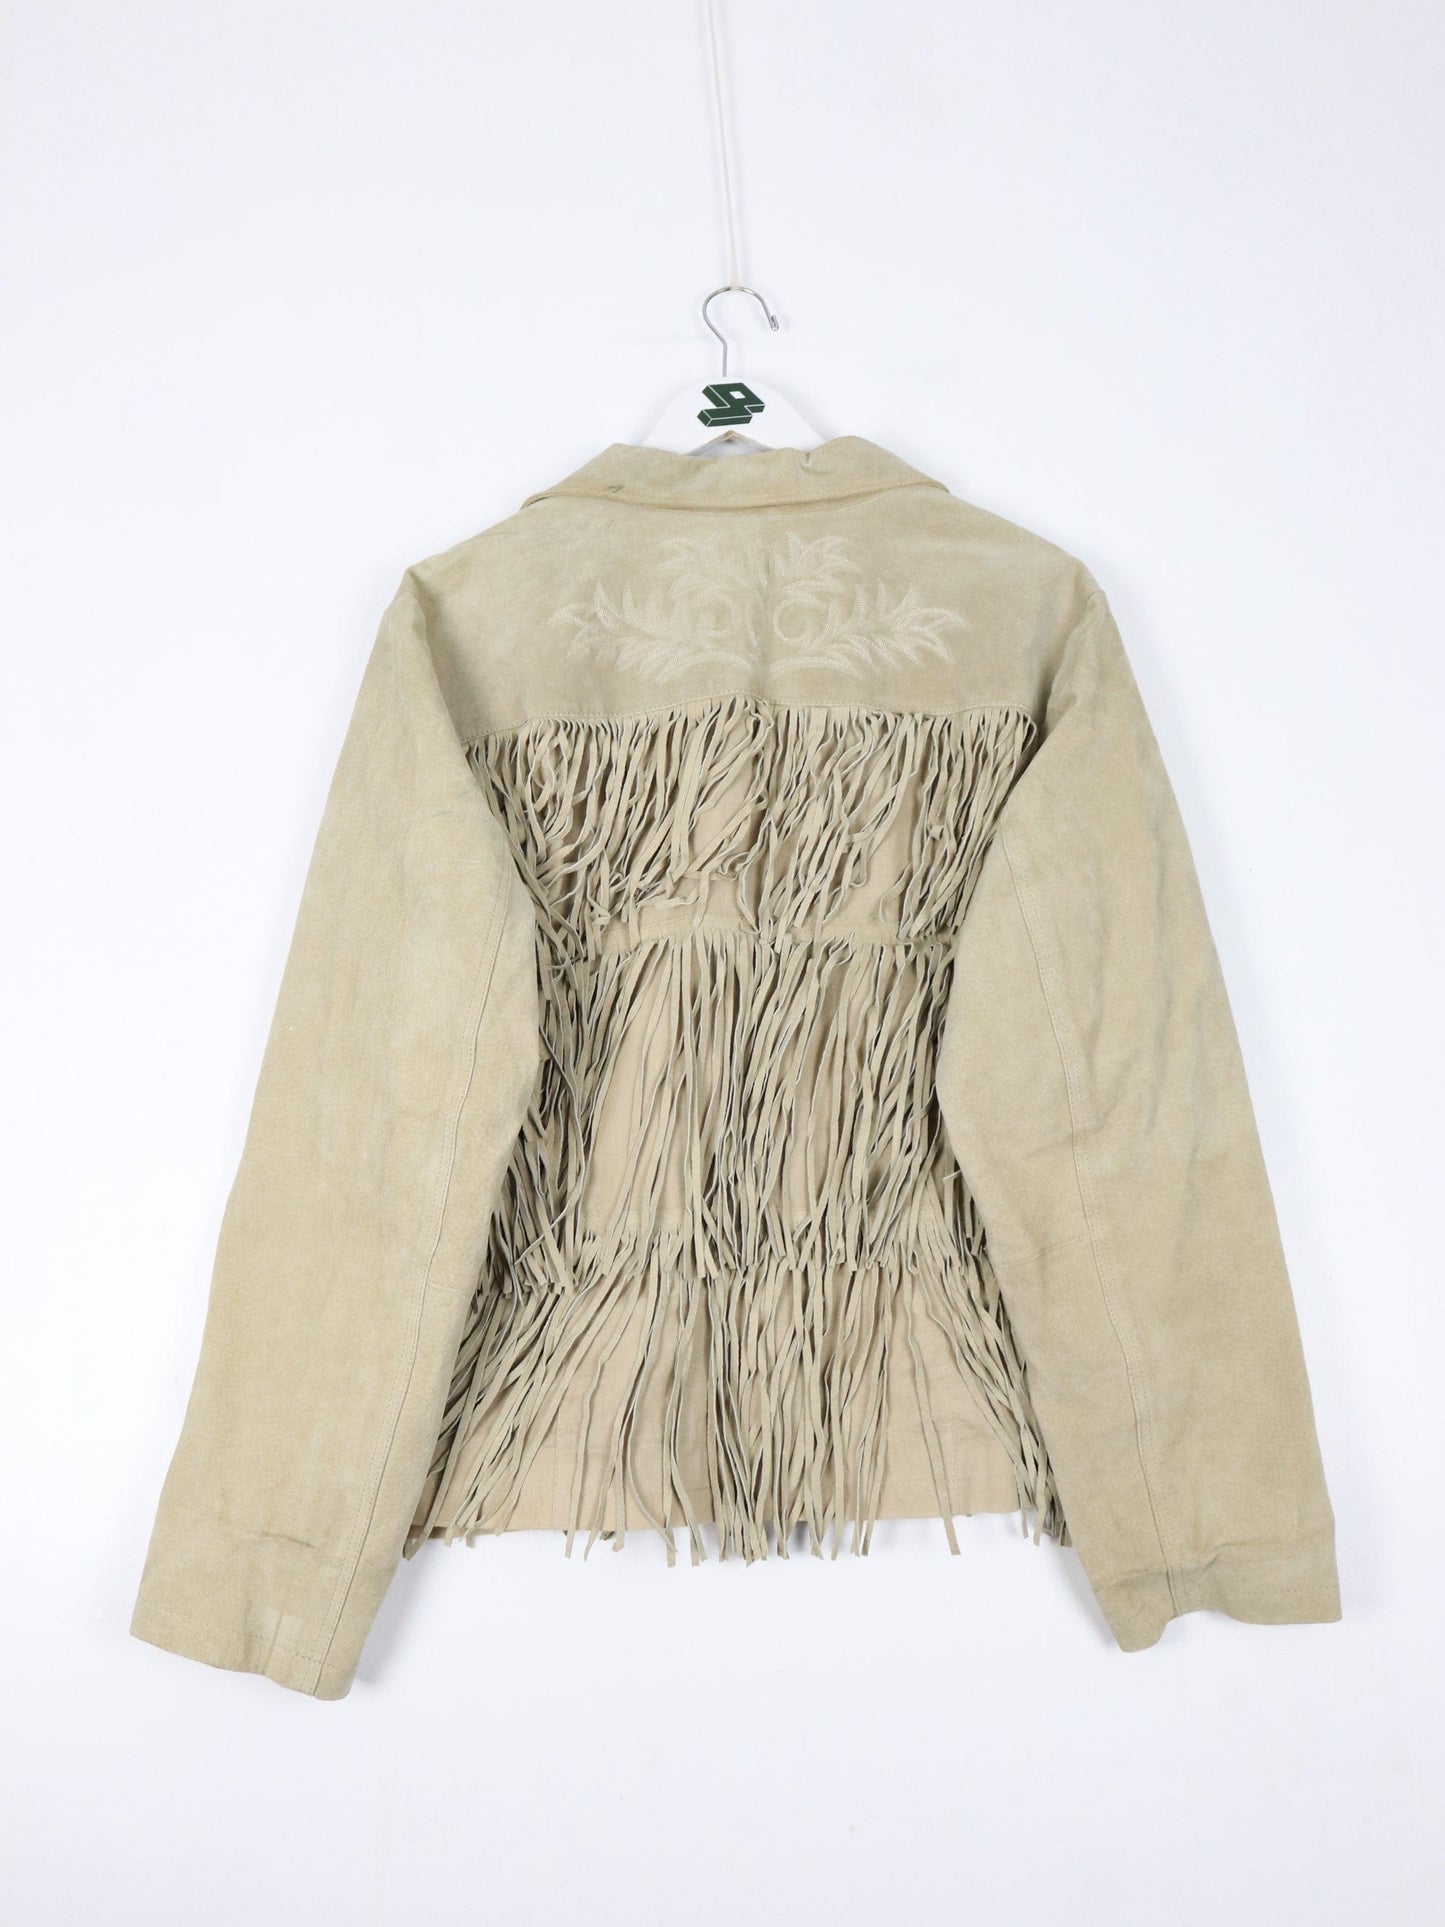 Other Jackets & Coats Avanti Jacket Womens 3X Beige Tassel Fringe Leather Cowgirl Western